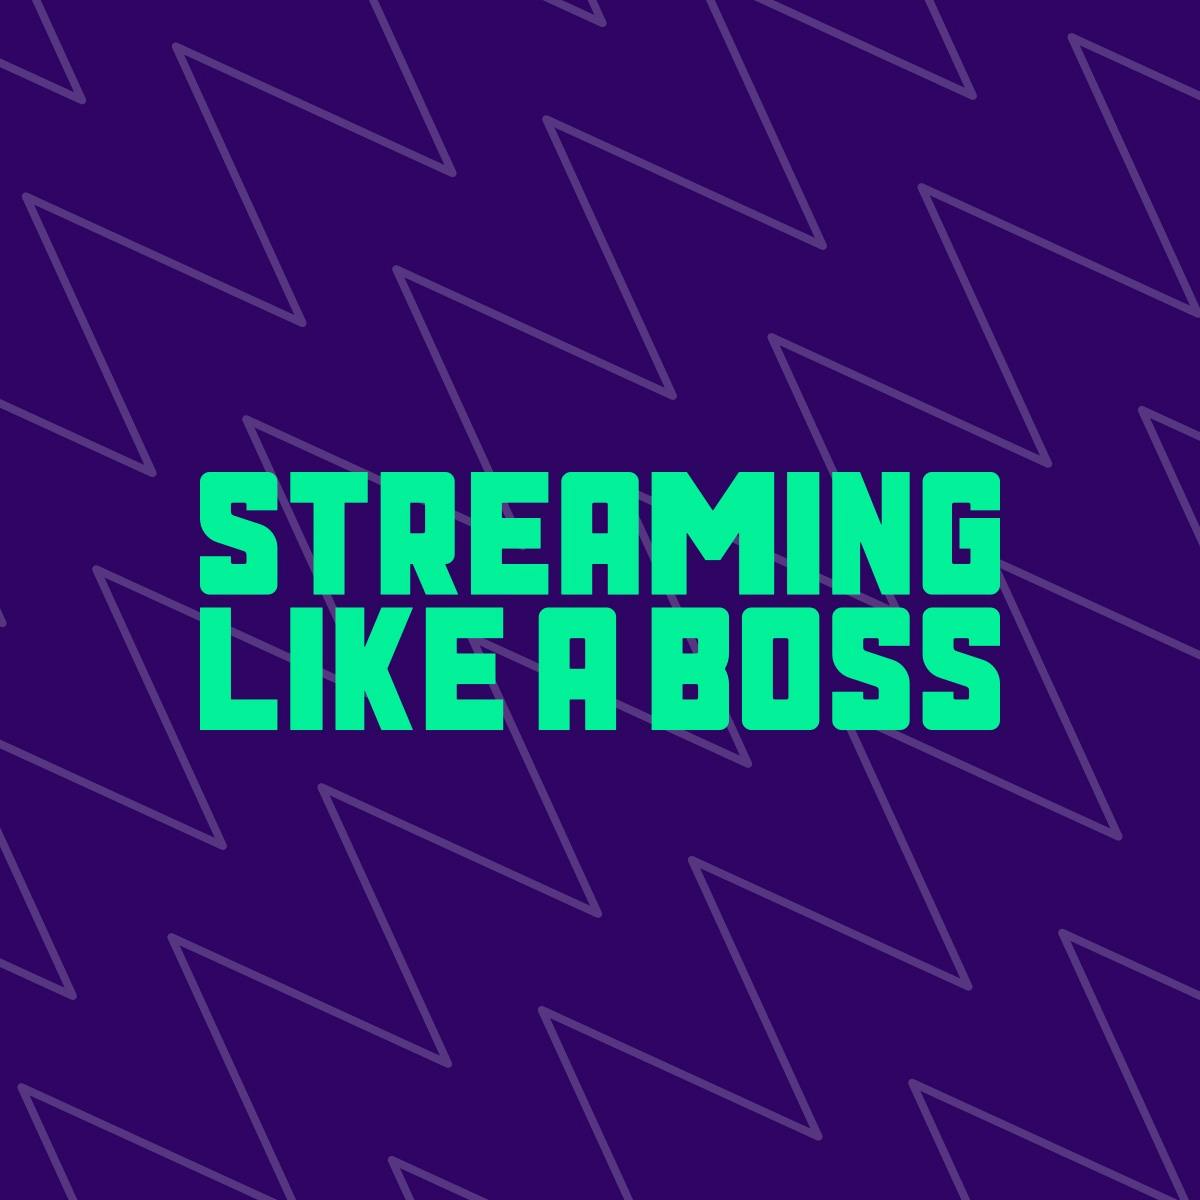 Streaming like a boss